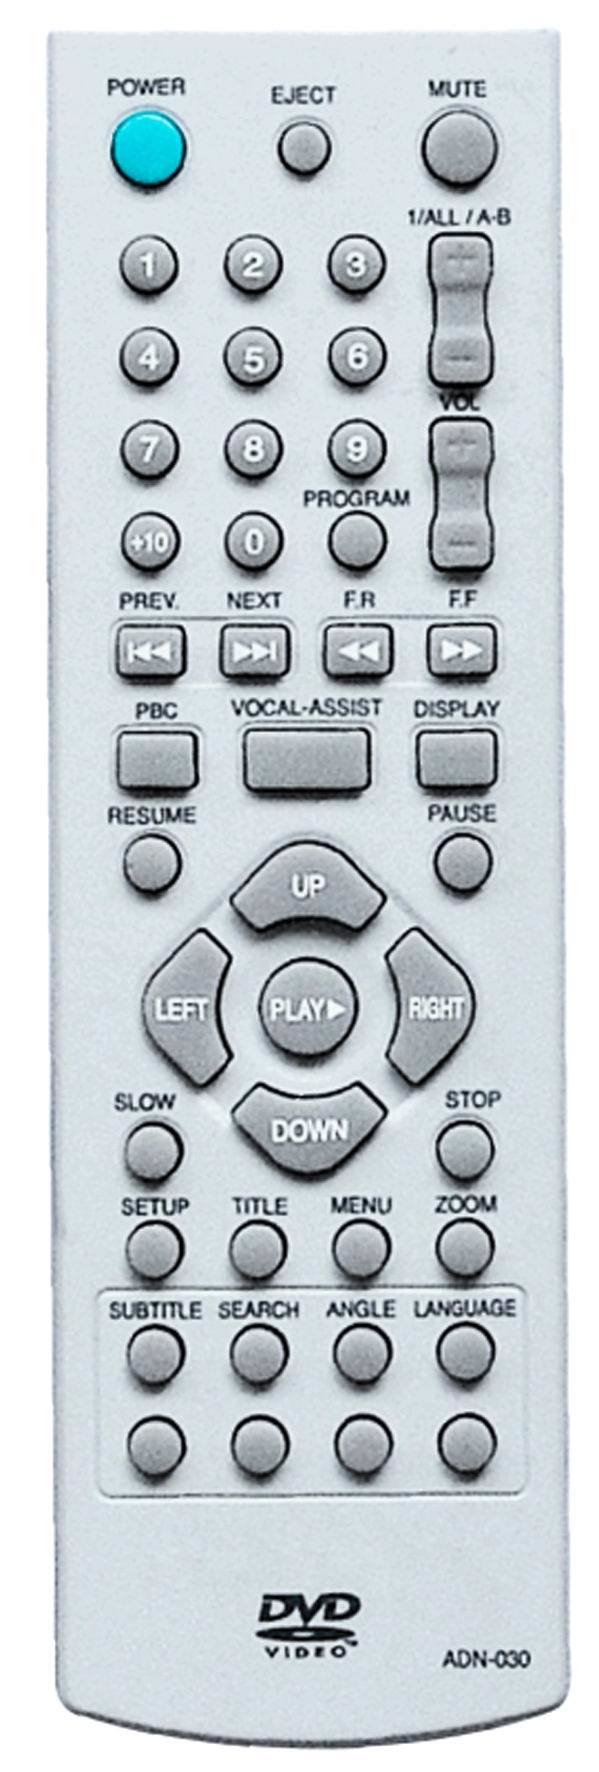 Kr-059 Universal Remote Control